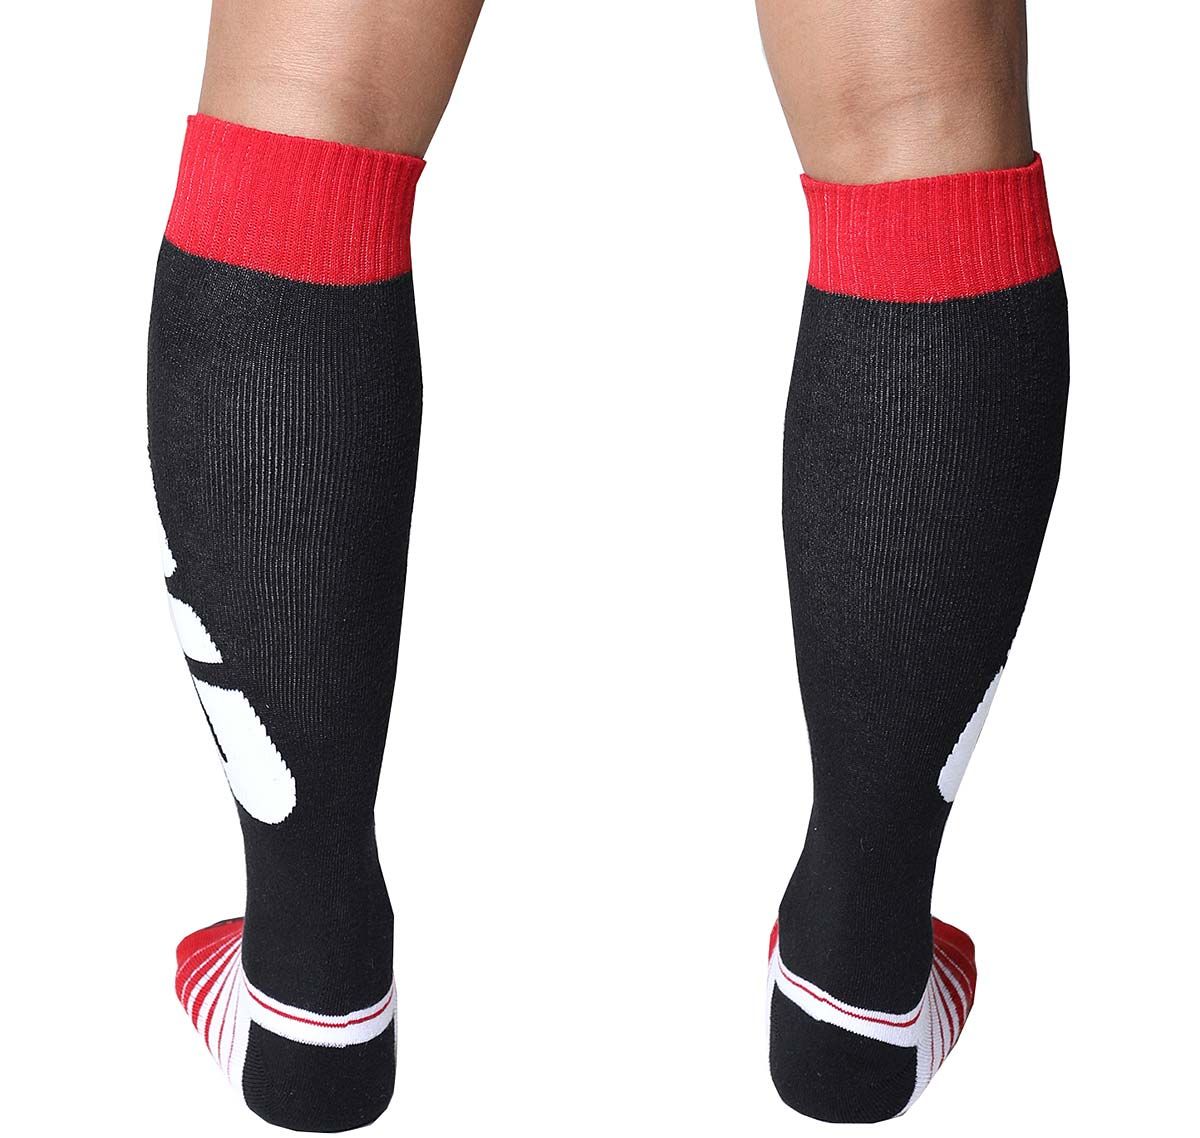 Cellblock 13 Sport socks VELOCITY 2.0 KNEE HIGH SOCK, red